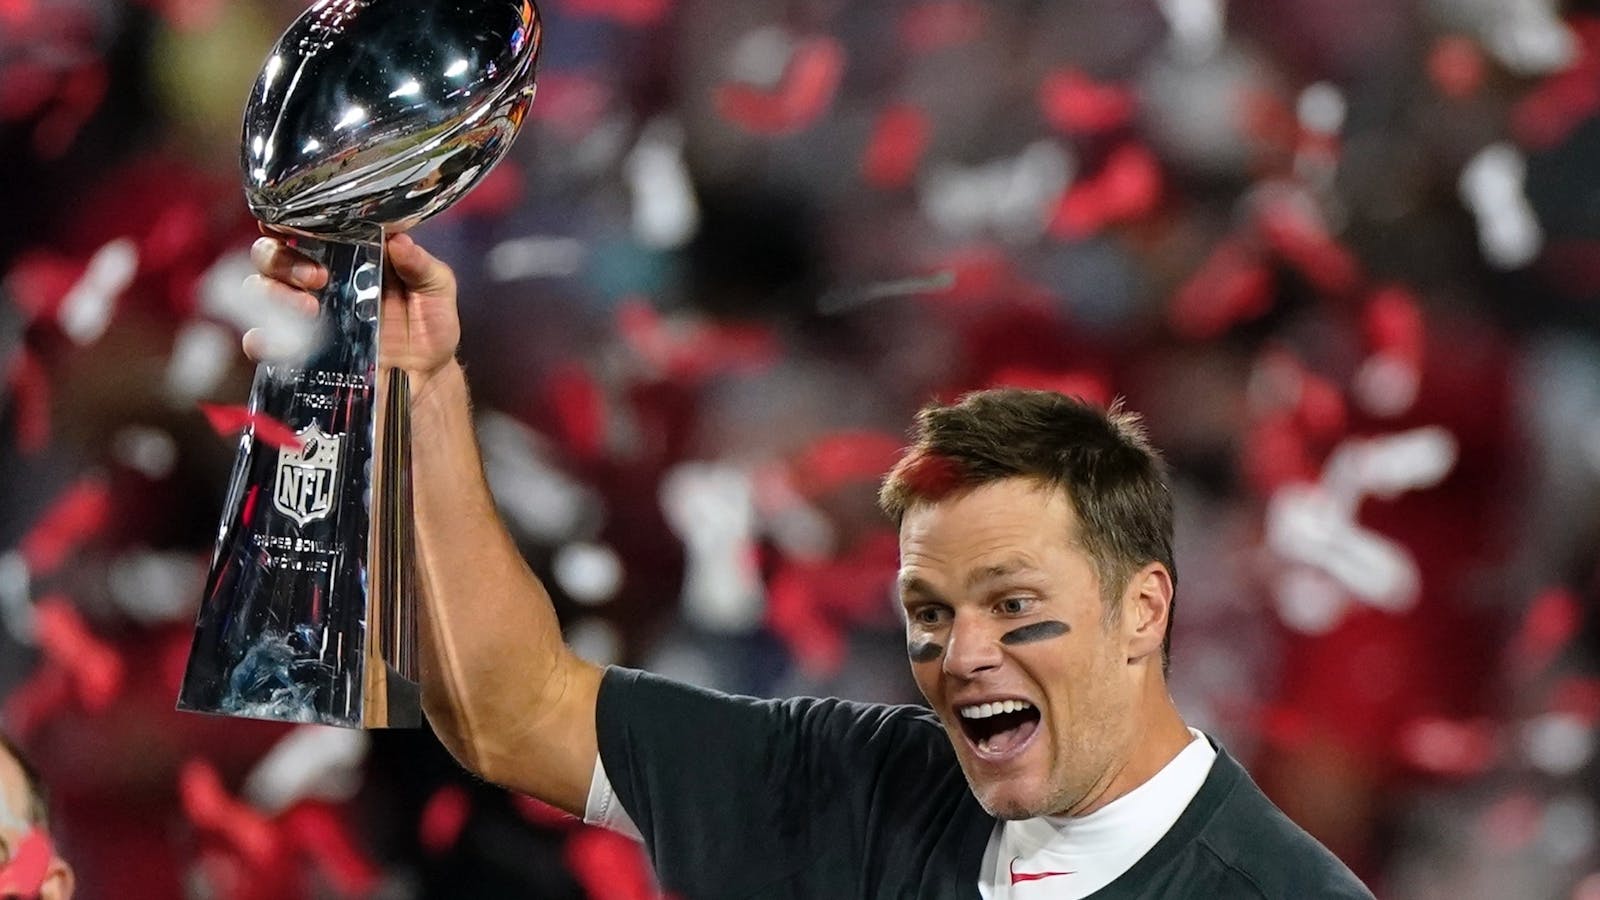 Tom Brady celebrating a Super Bowl victory in February. Photo: AP